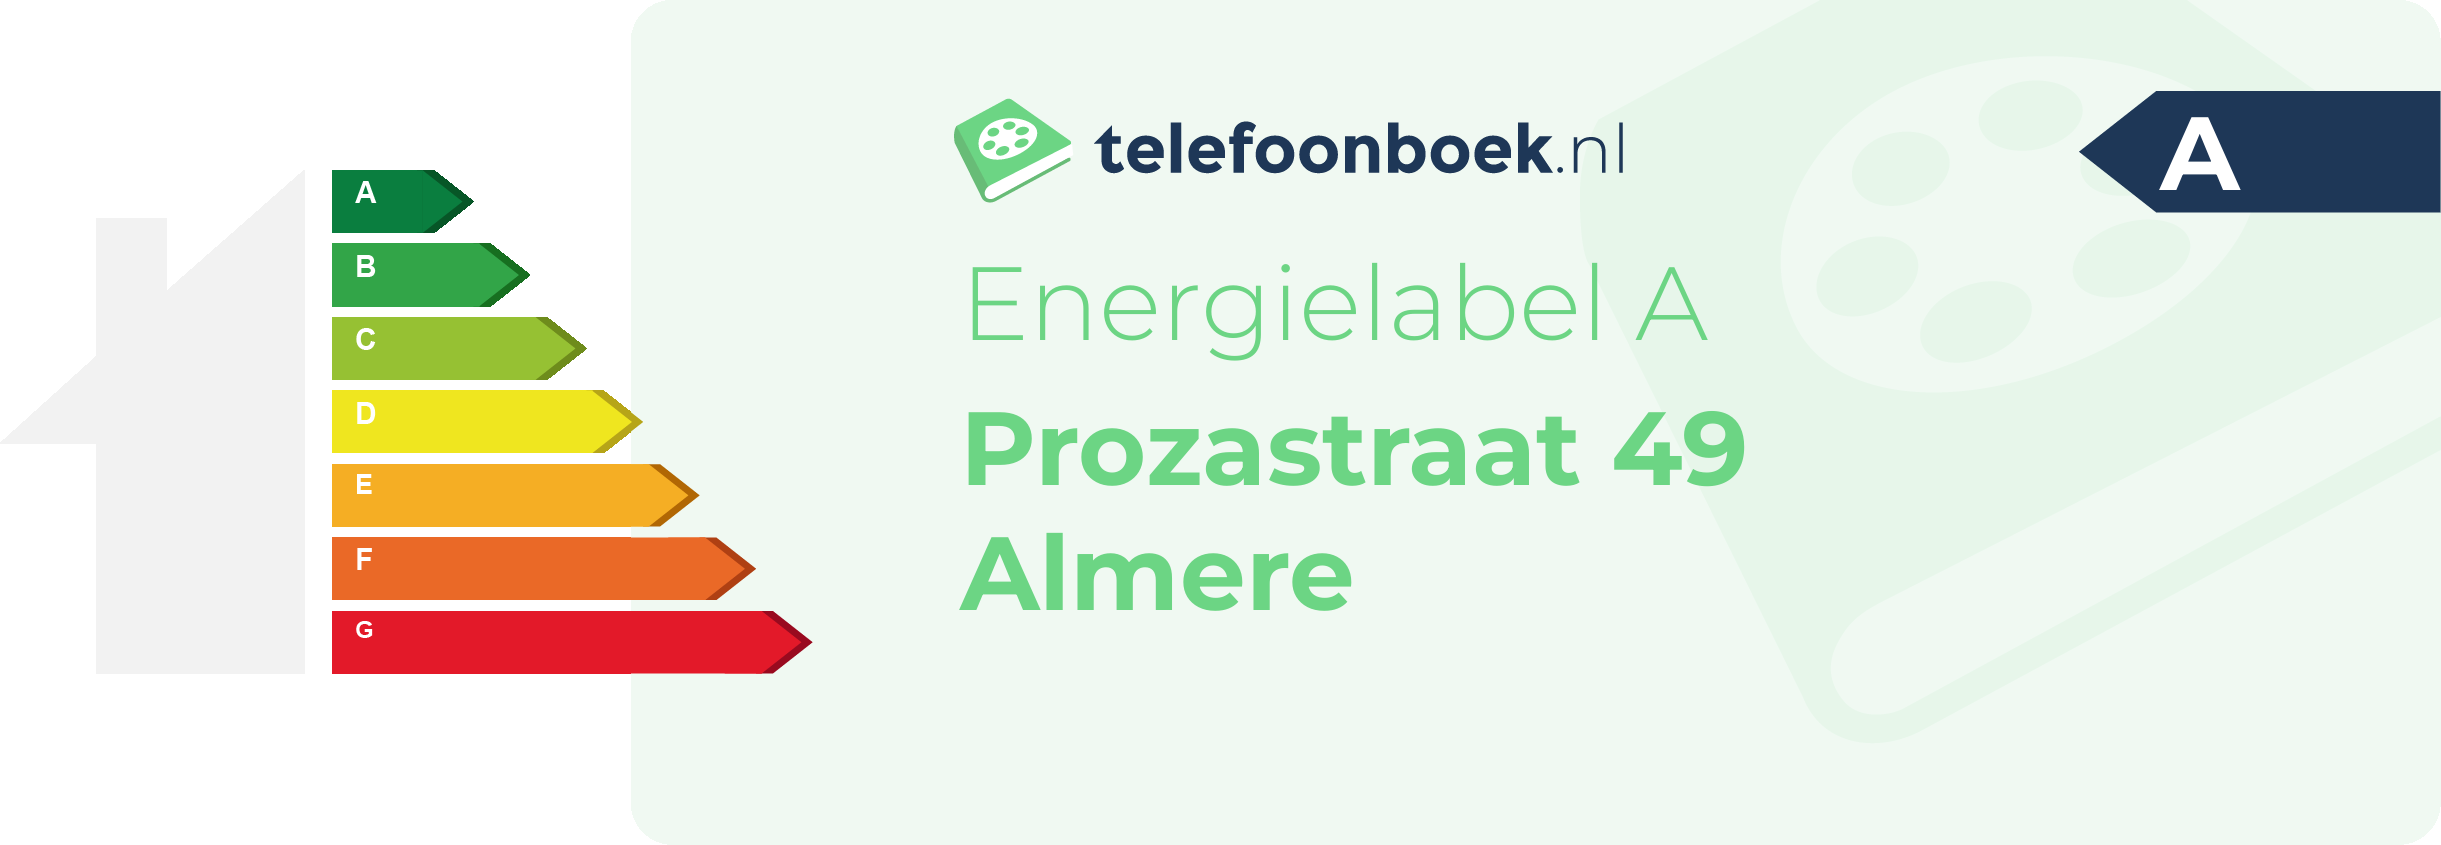 Energielabel Prozastraat 49 Almere